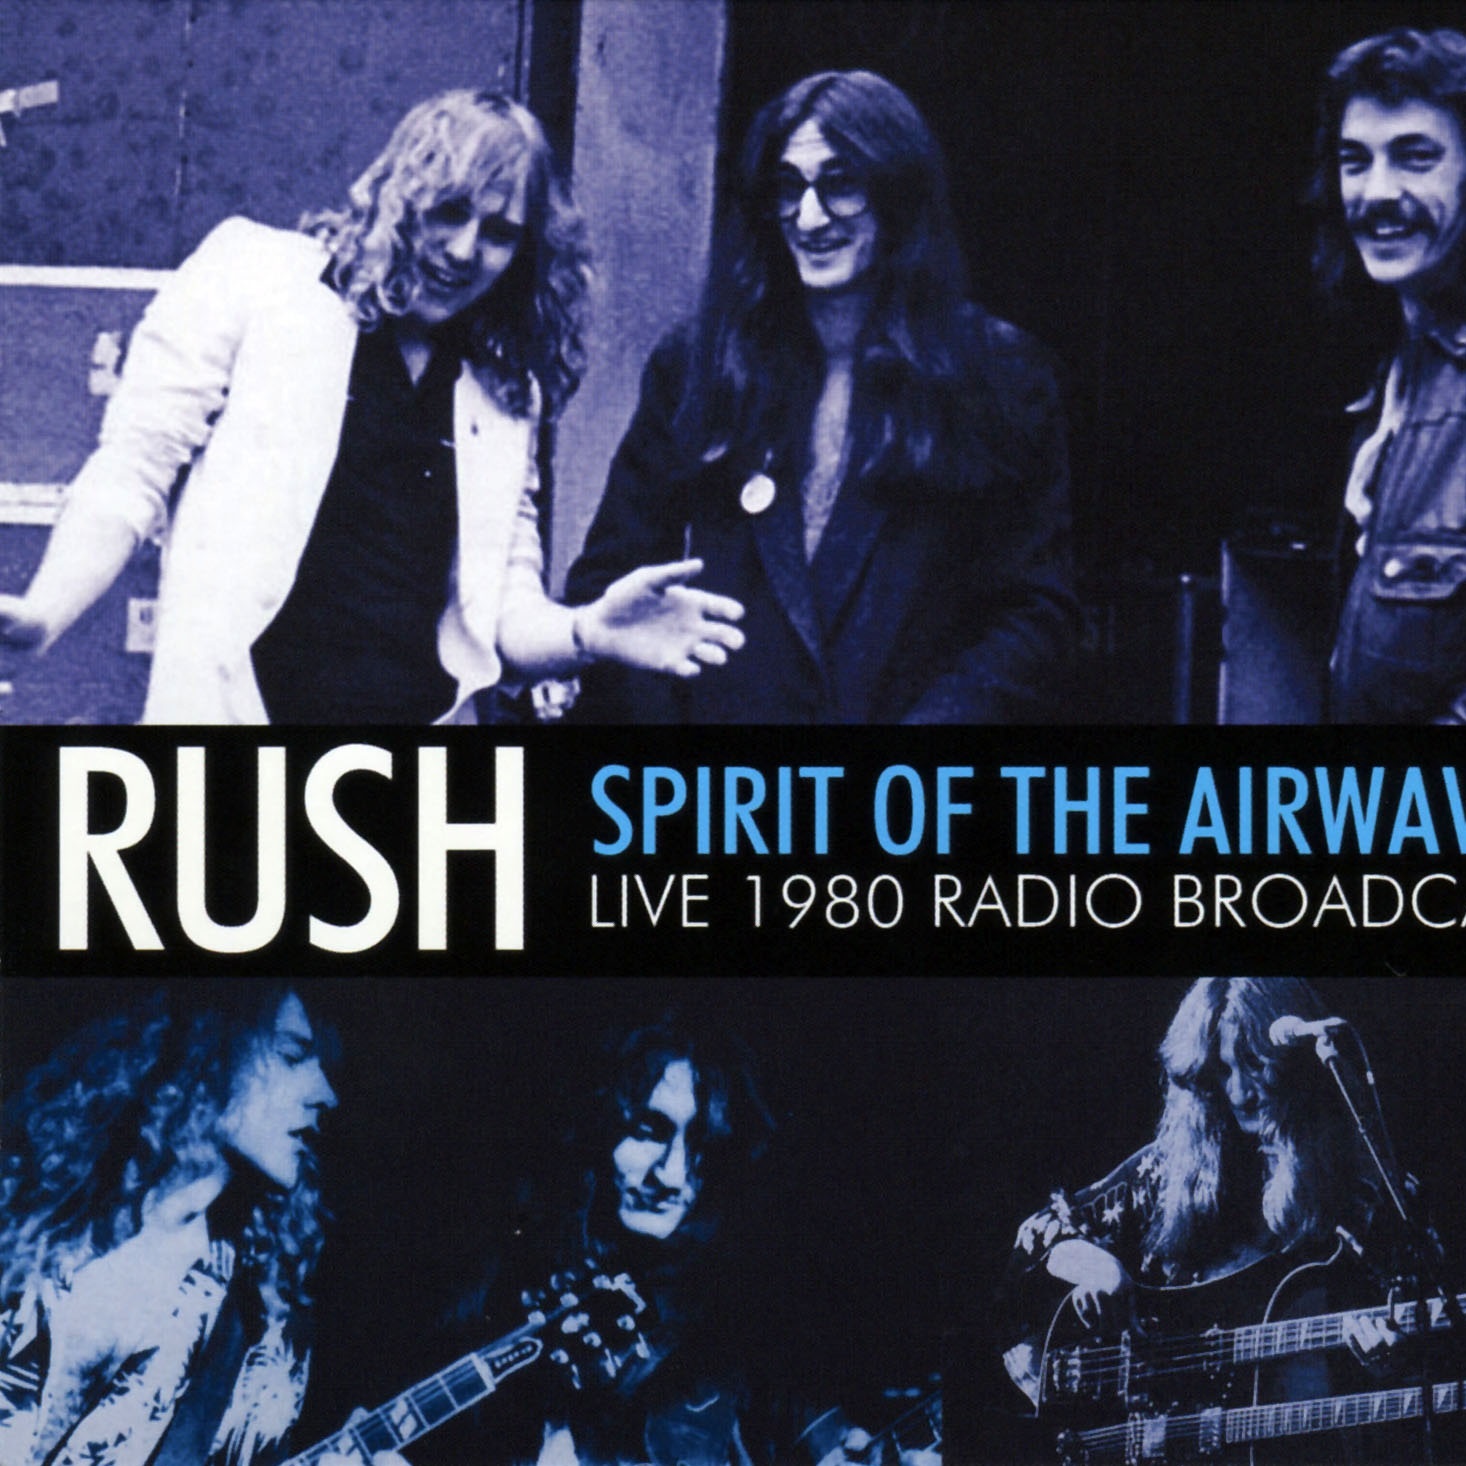 The Spirit of Radio